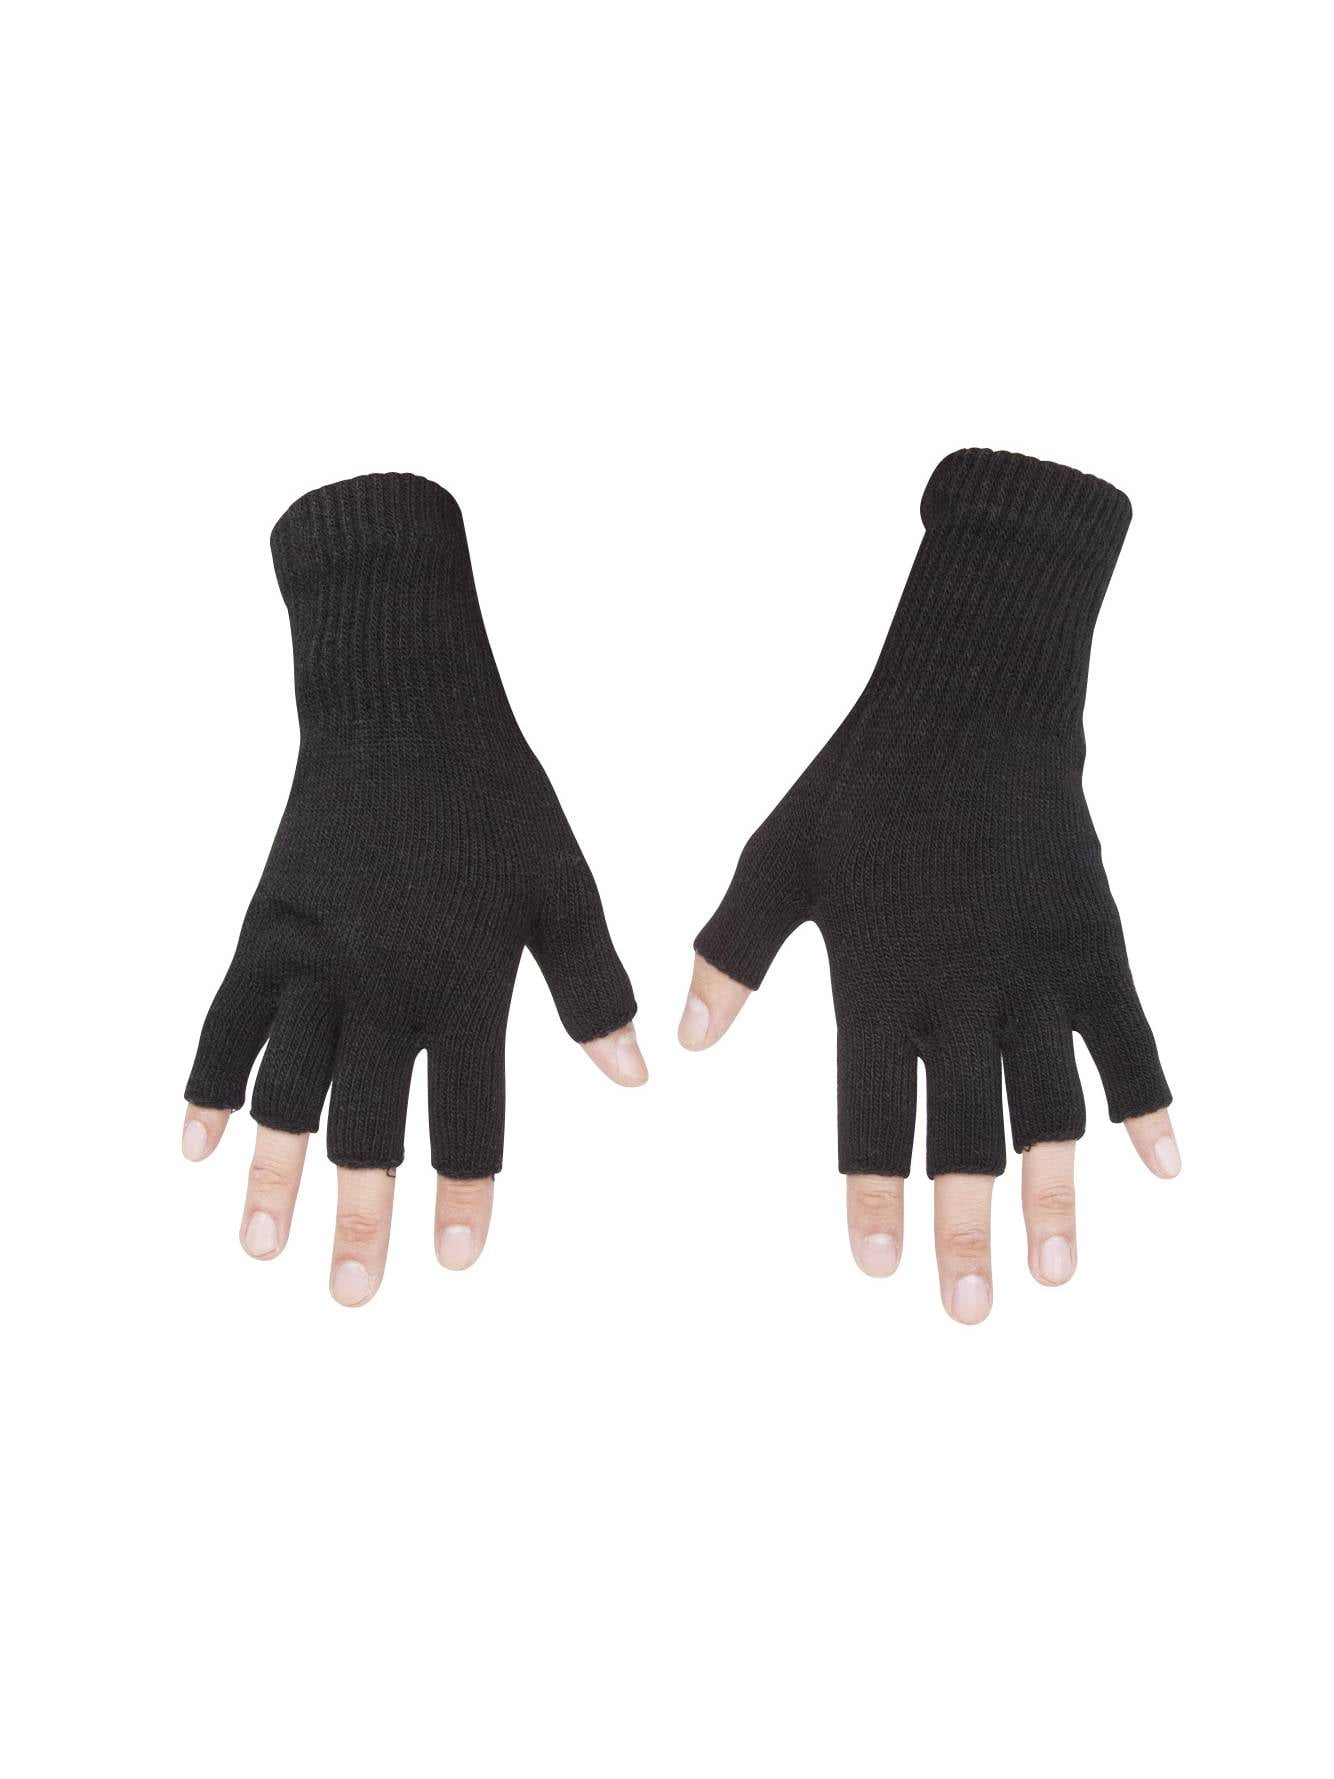 Navy Blue Half Knit Gloves, Stretchy Threads Finger Warm Unisex Fingerless Gravity